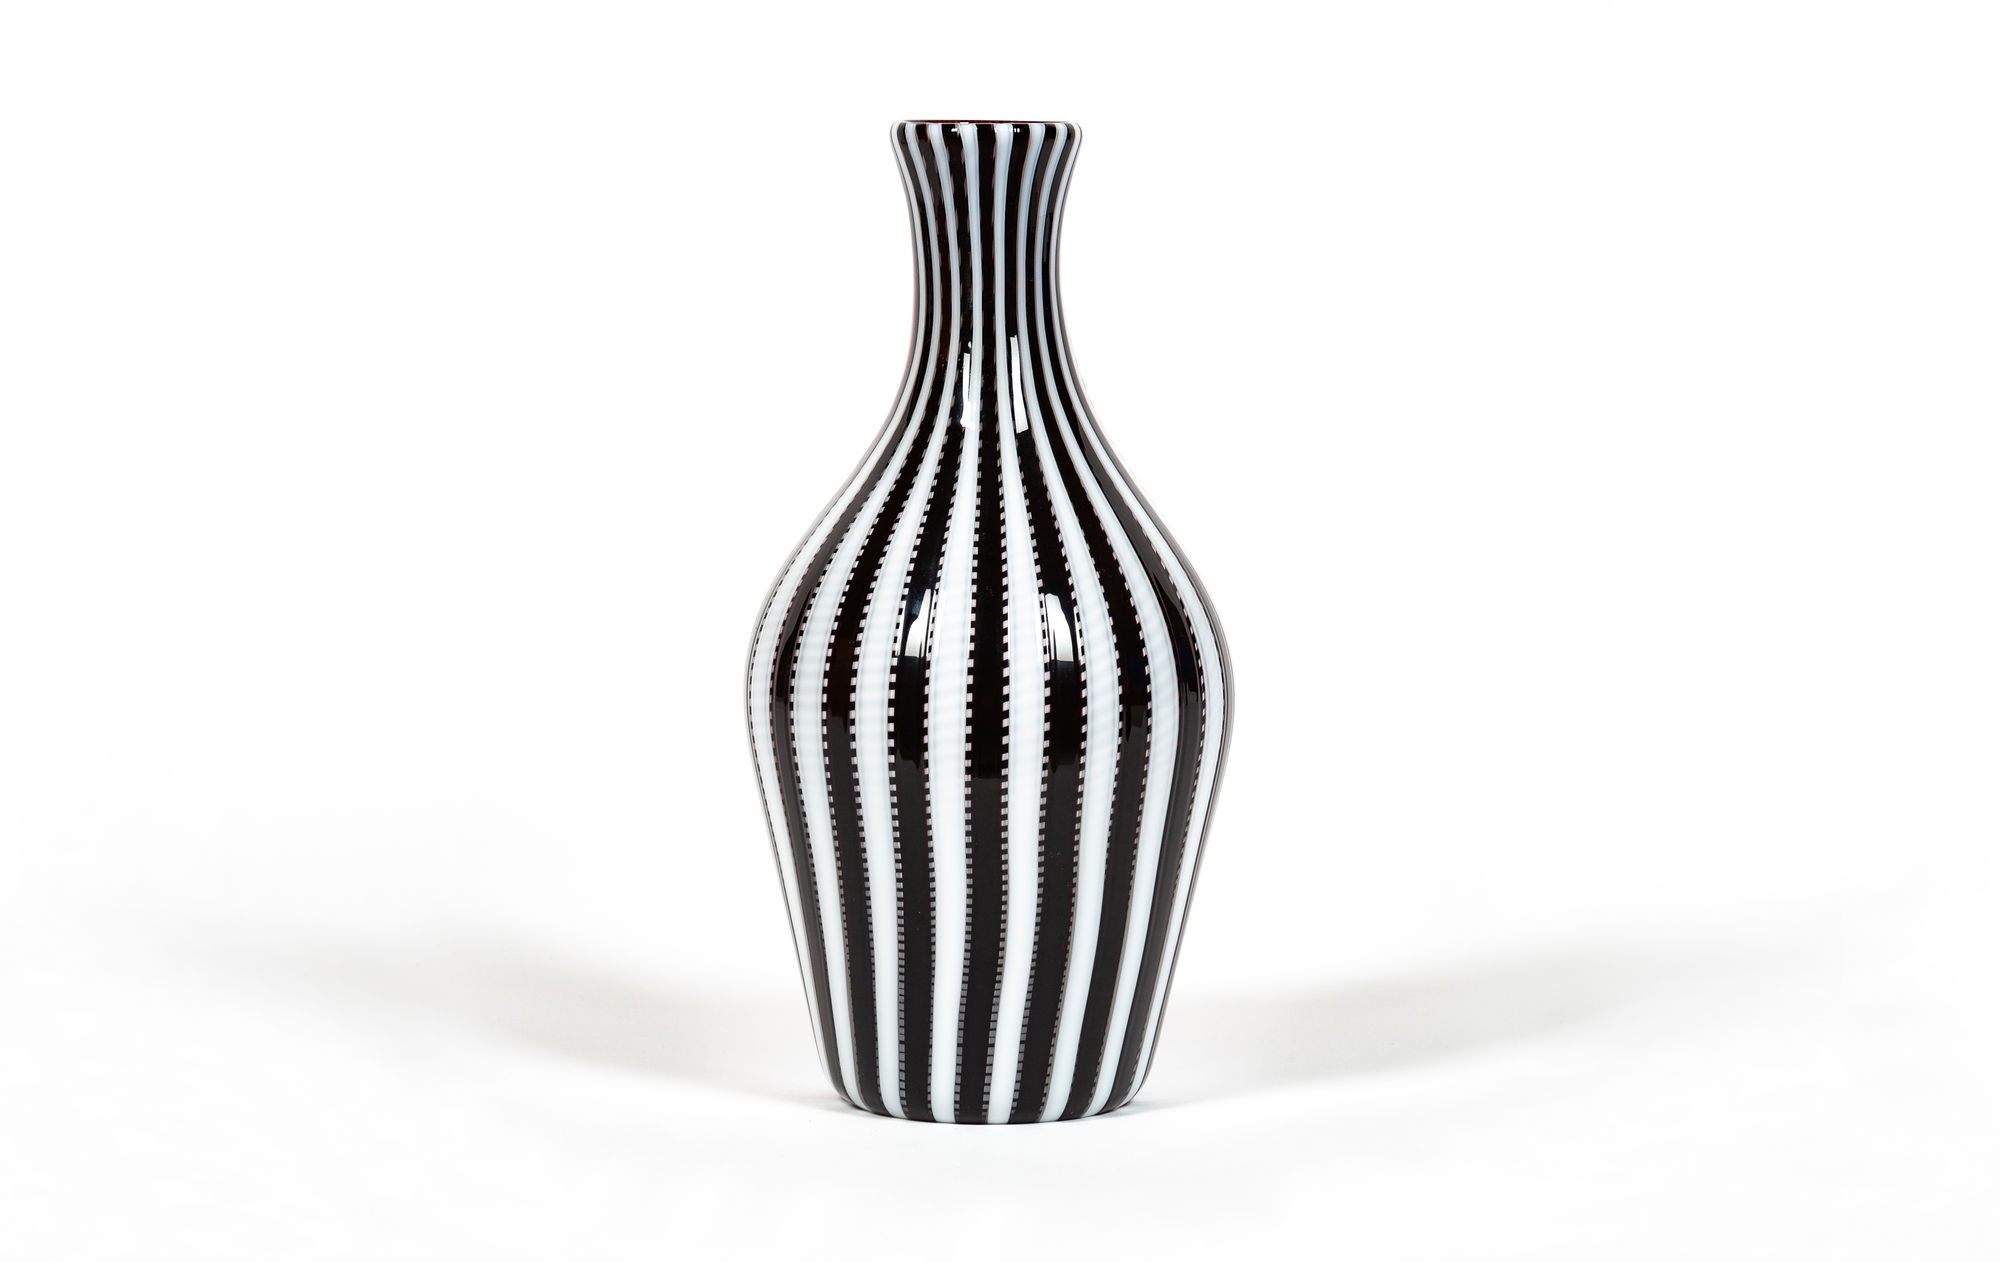 Gianni Versace Glass vases